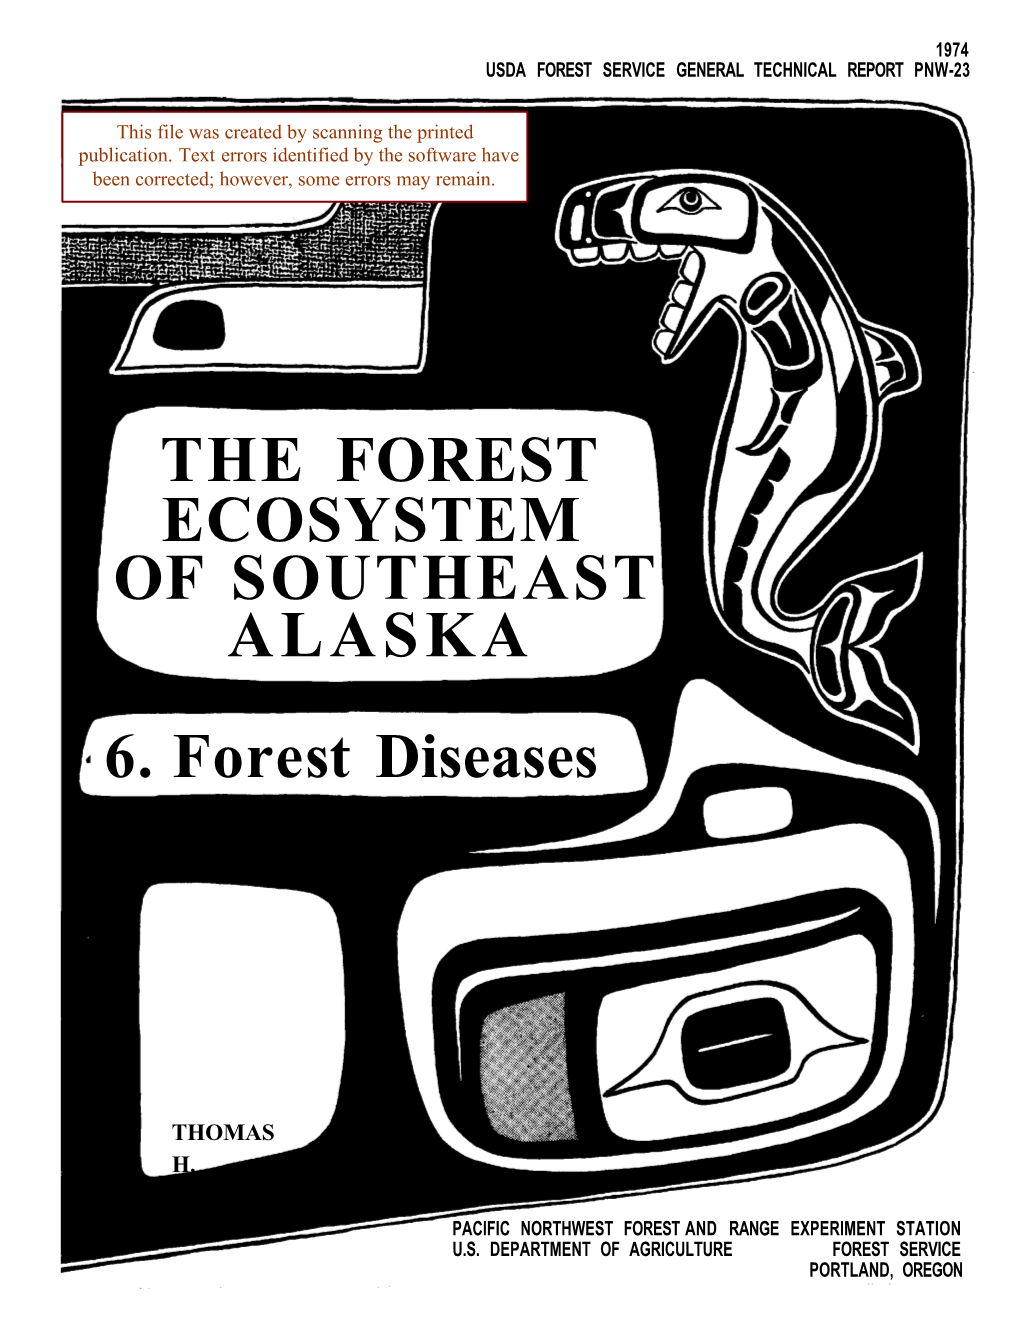 The Forest Ecosystem of Southeast Alaska 6